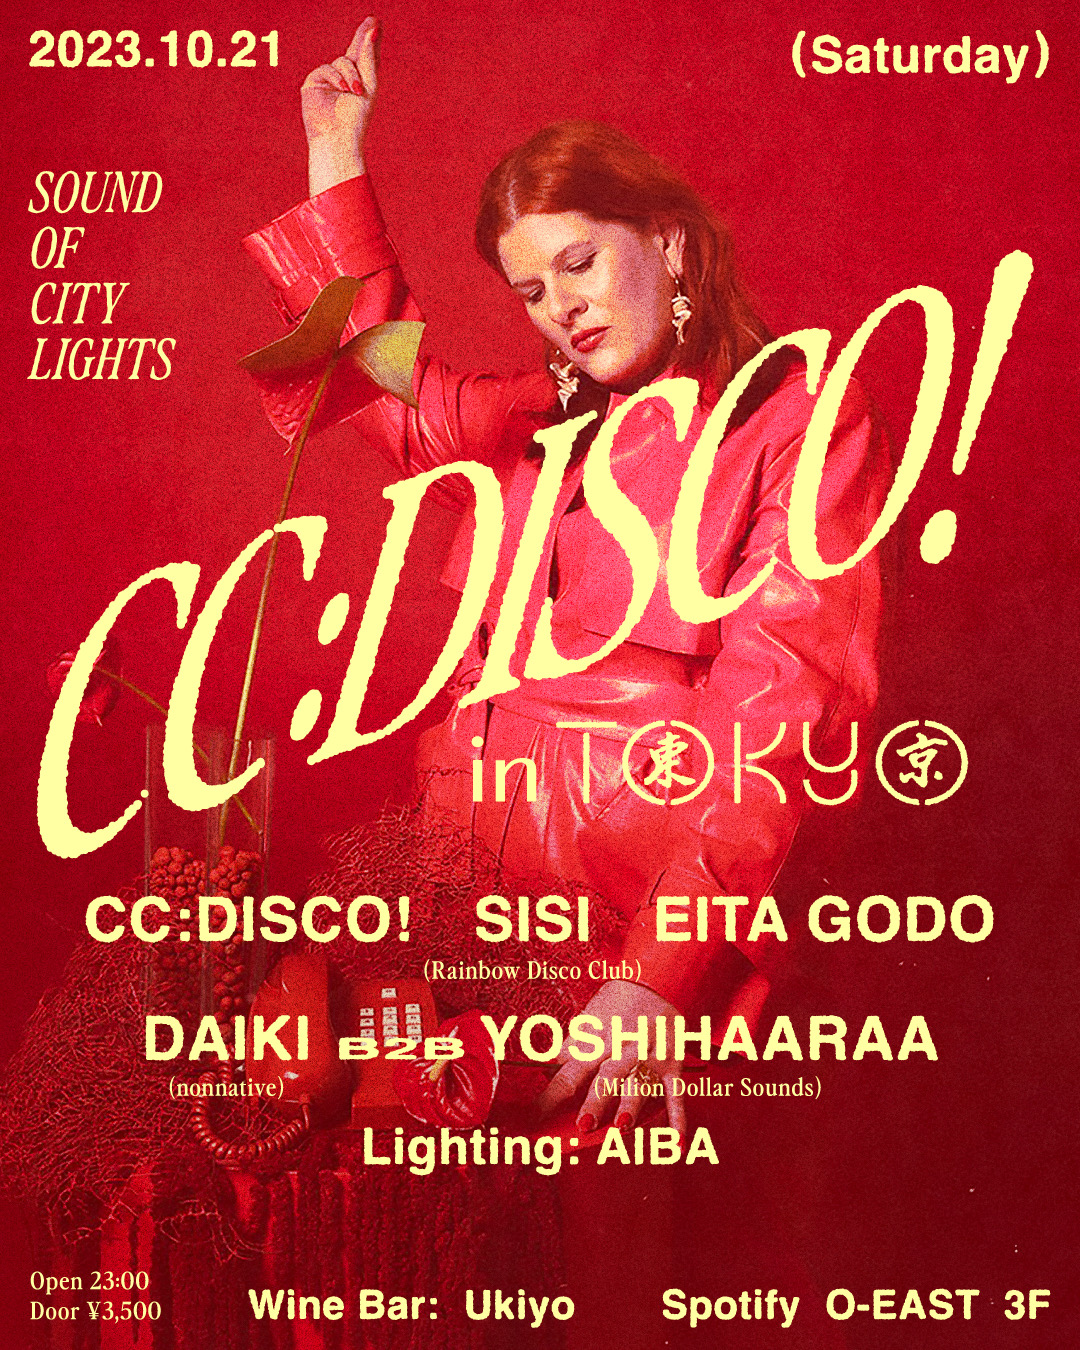 CC:DISCO! IN TOKYO – Sound Of City Lights –